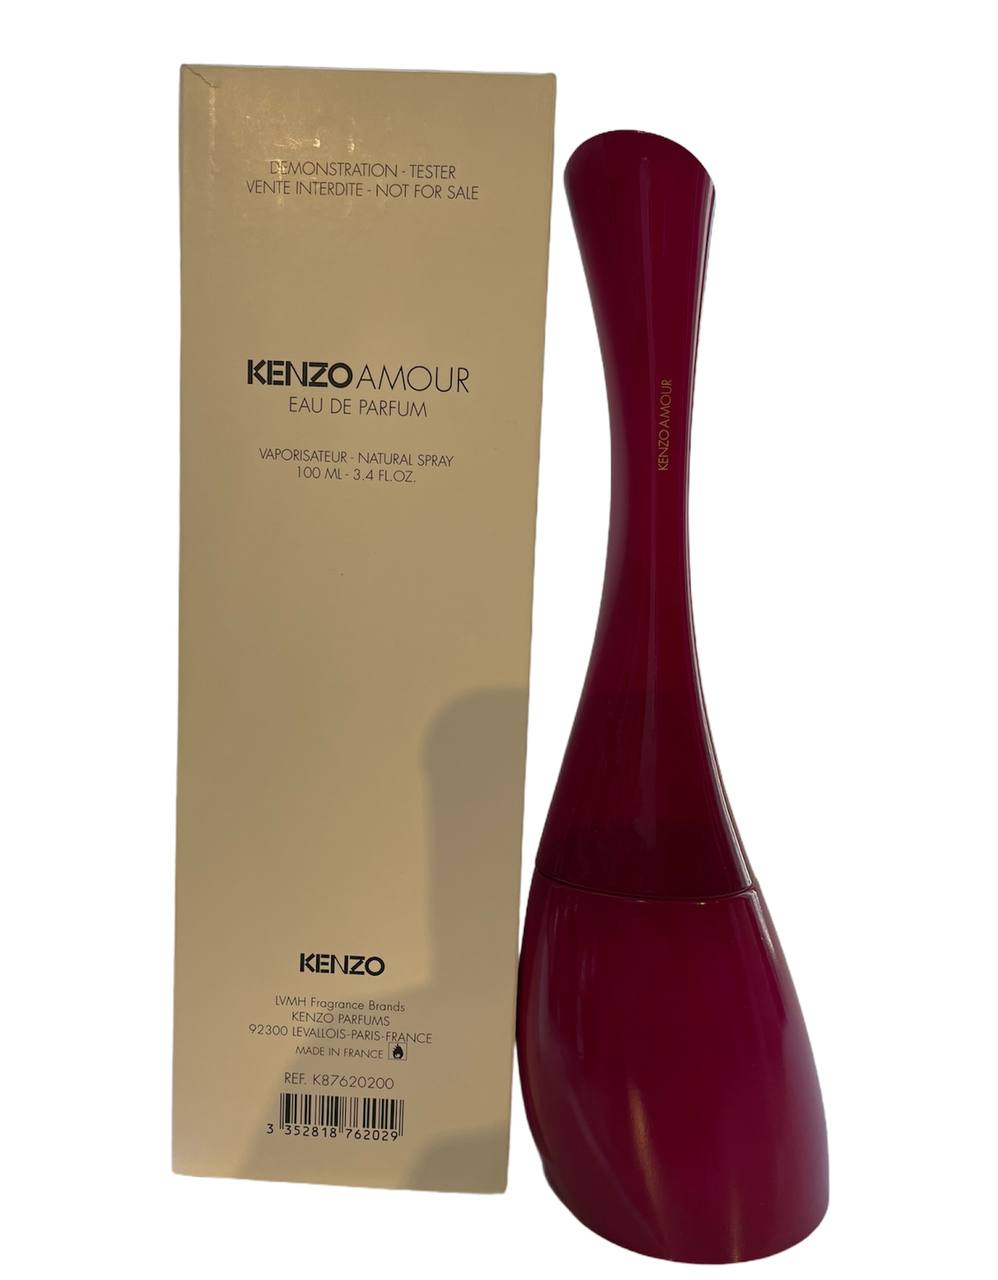 Kenzo Amour Kenzo Eau De Parfum 100 ml